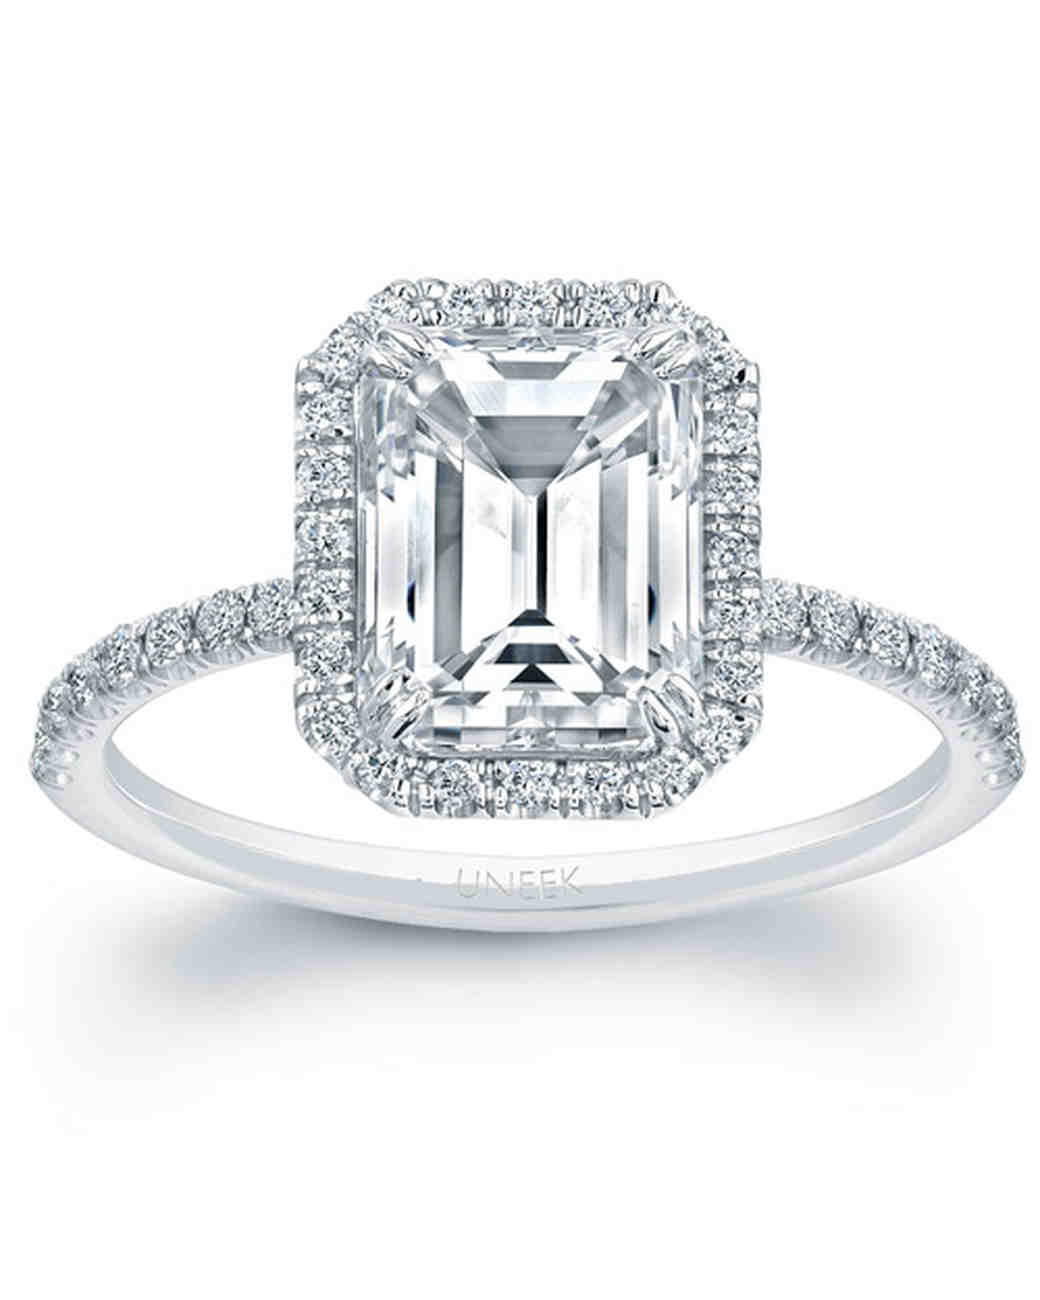 Emerald Cut Wedding Rings
 Elegant Emerald Cut Engagement Rings